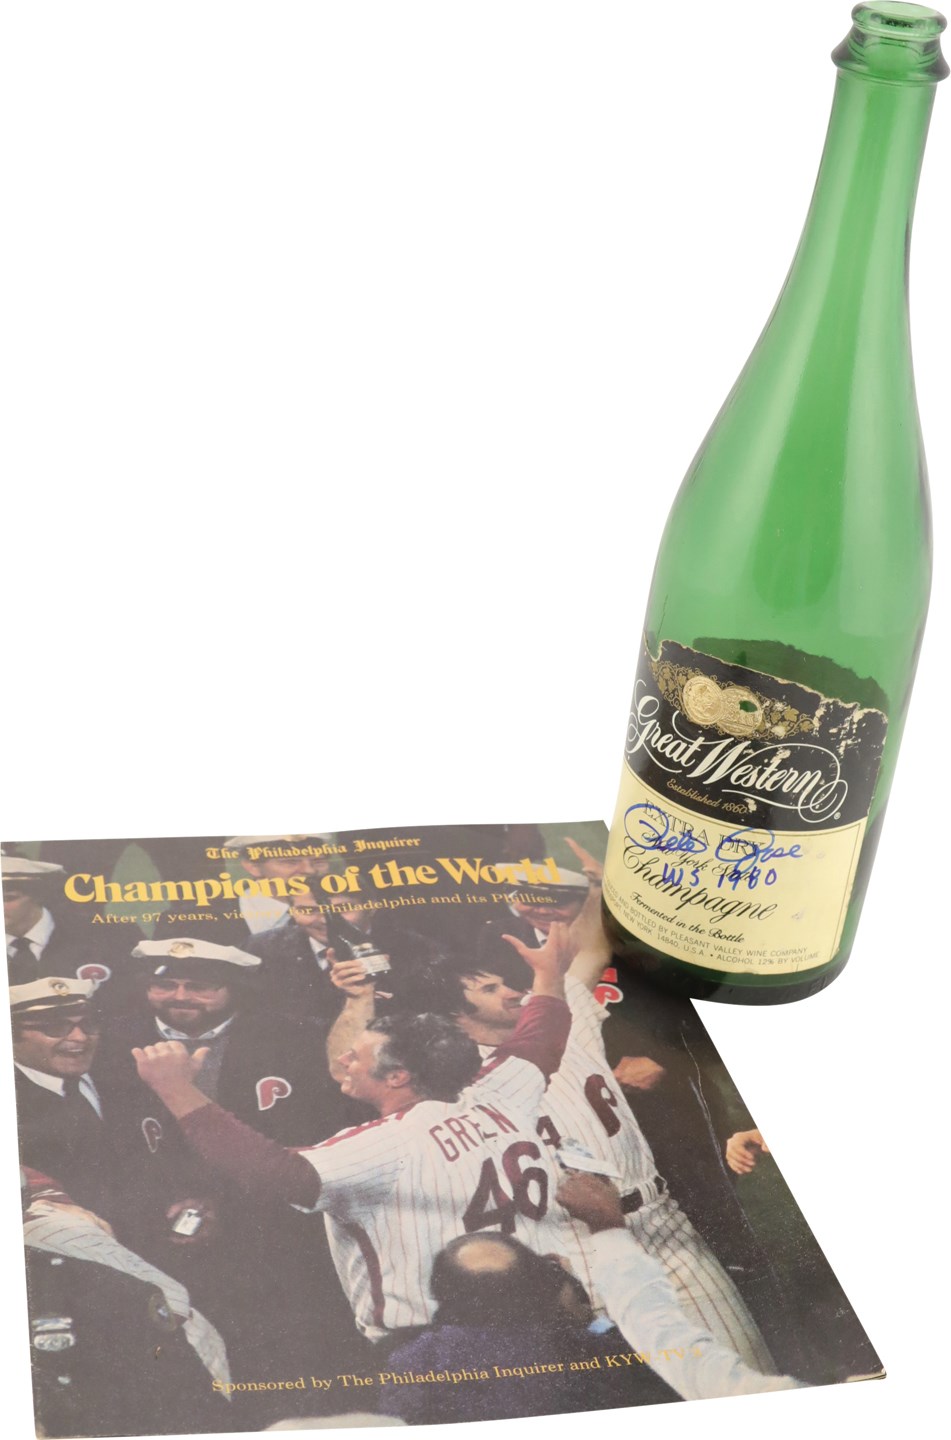 - 1980 Philadelphia Phillies World Series Championship Celebratory Champagne Bottle Signed by Pete Rose